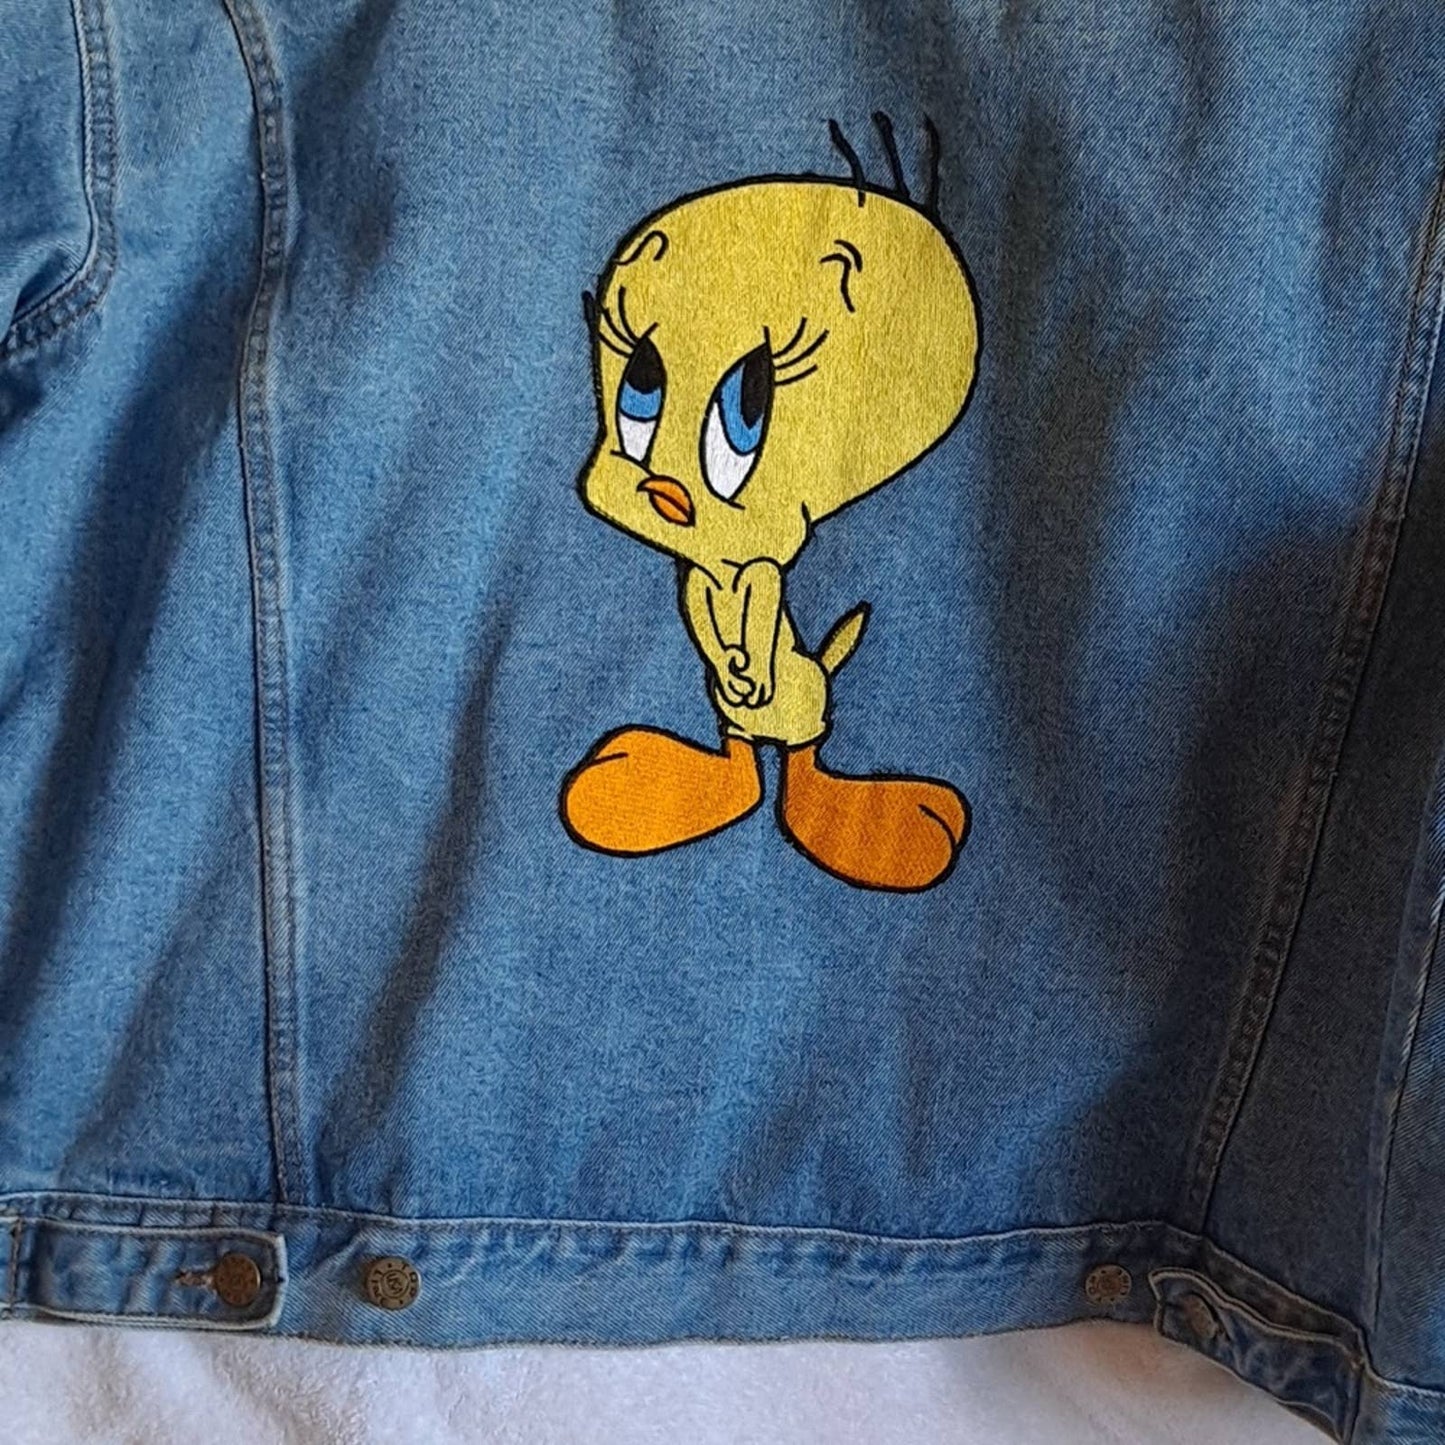 Extra Heavy XL Tweety Bird Denim jacket in great shape 1992ish VINTAGE